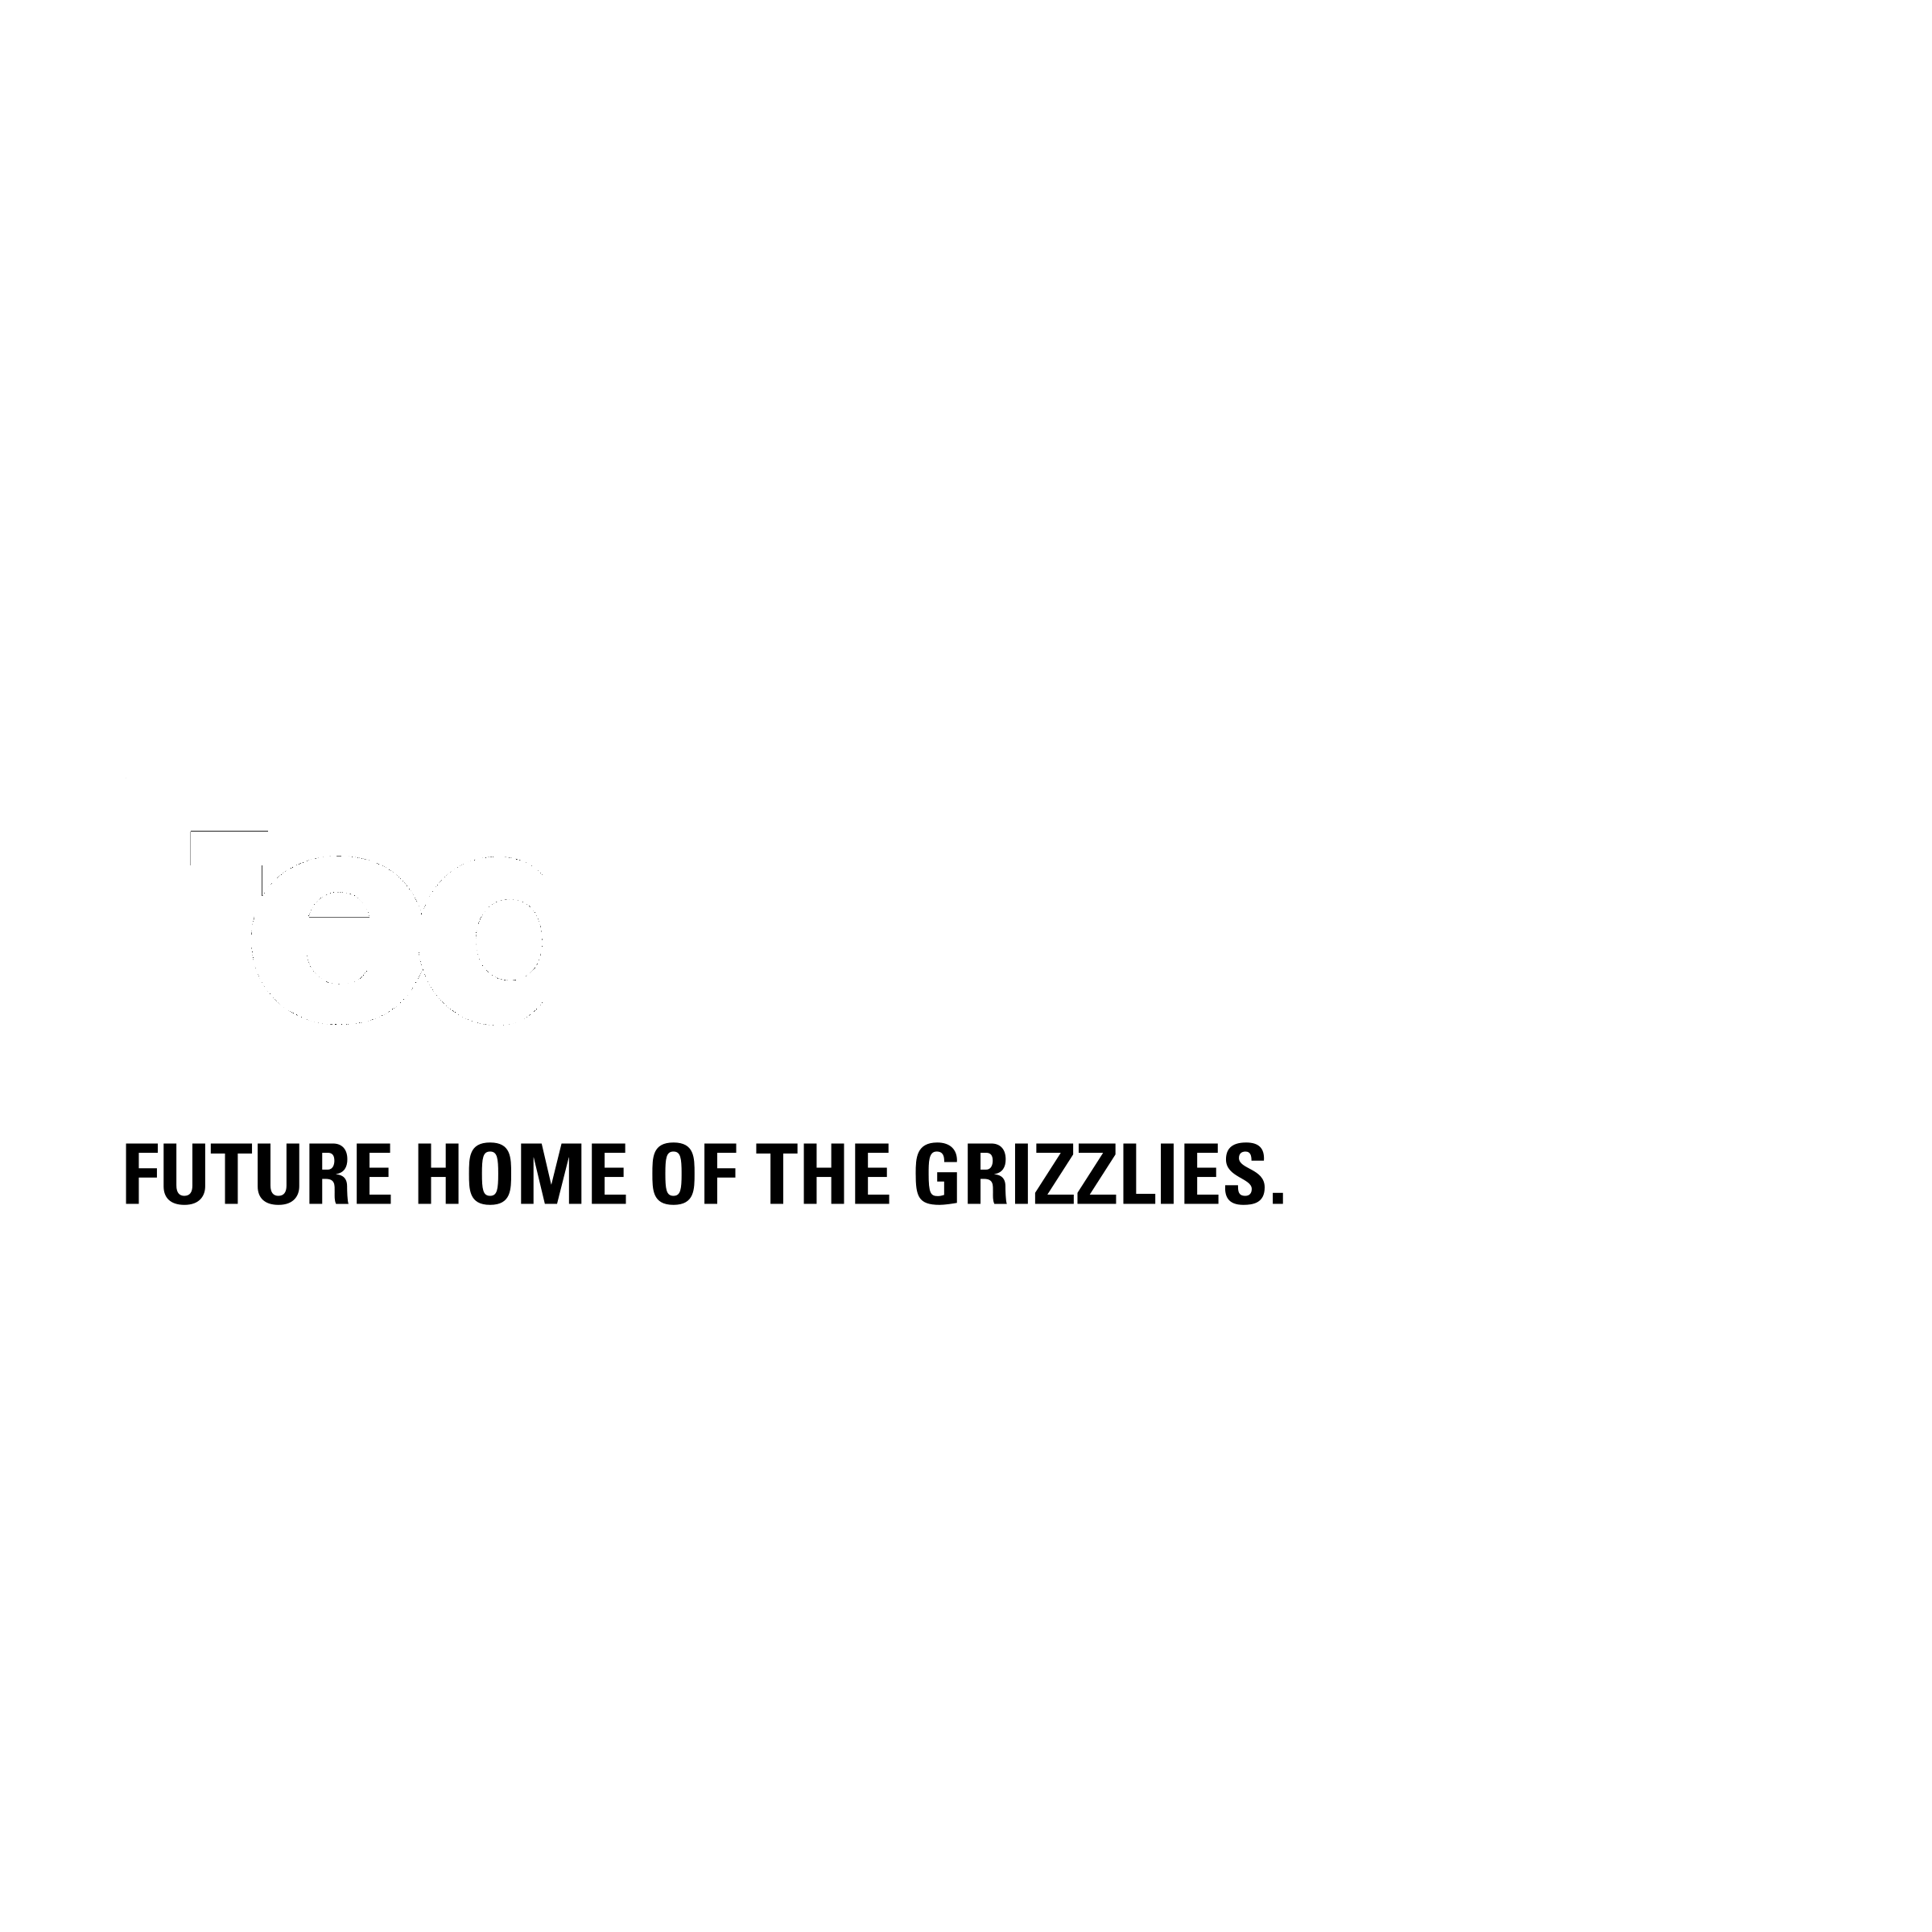 FedExForum Logo - FedExForum Logo PNG Transparent & SVG Vector - Freebie Supply